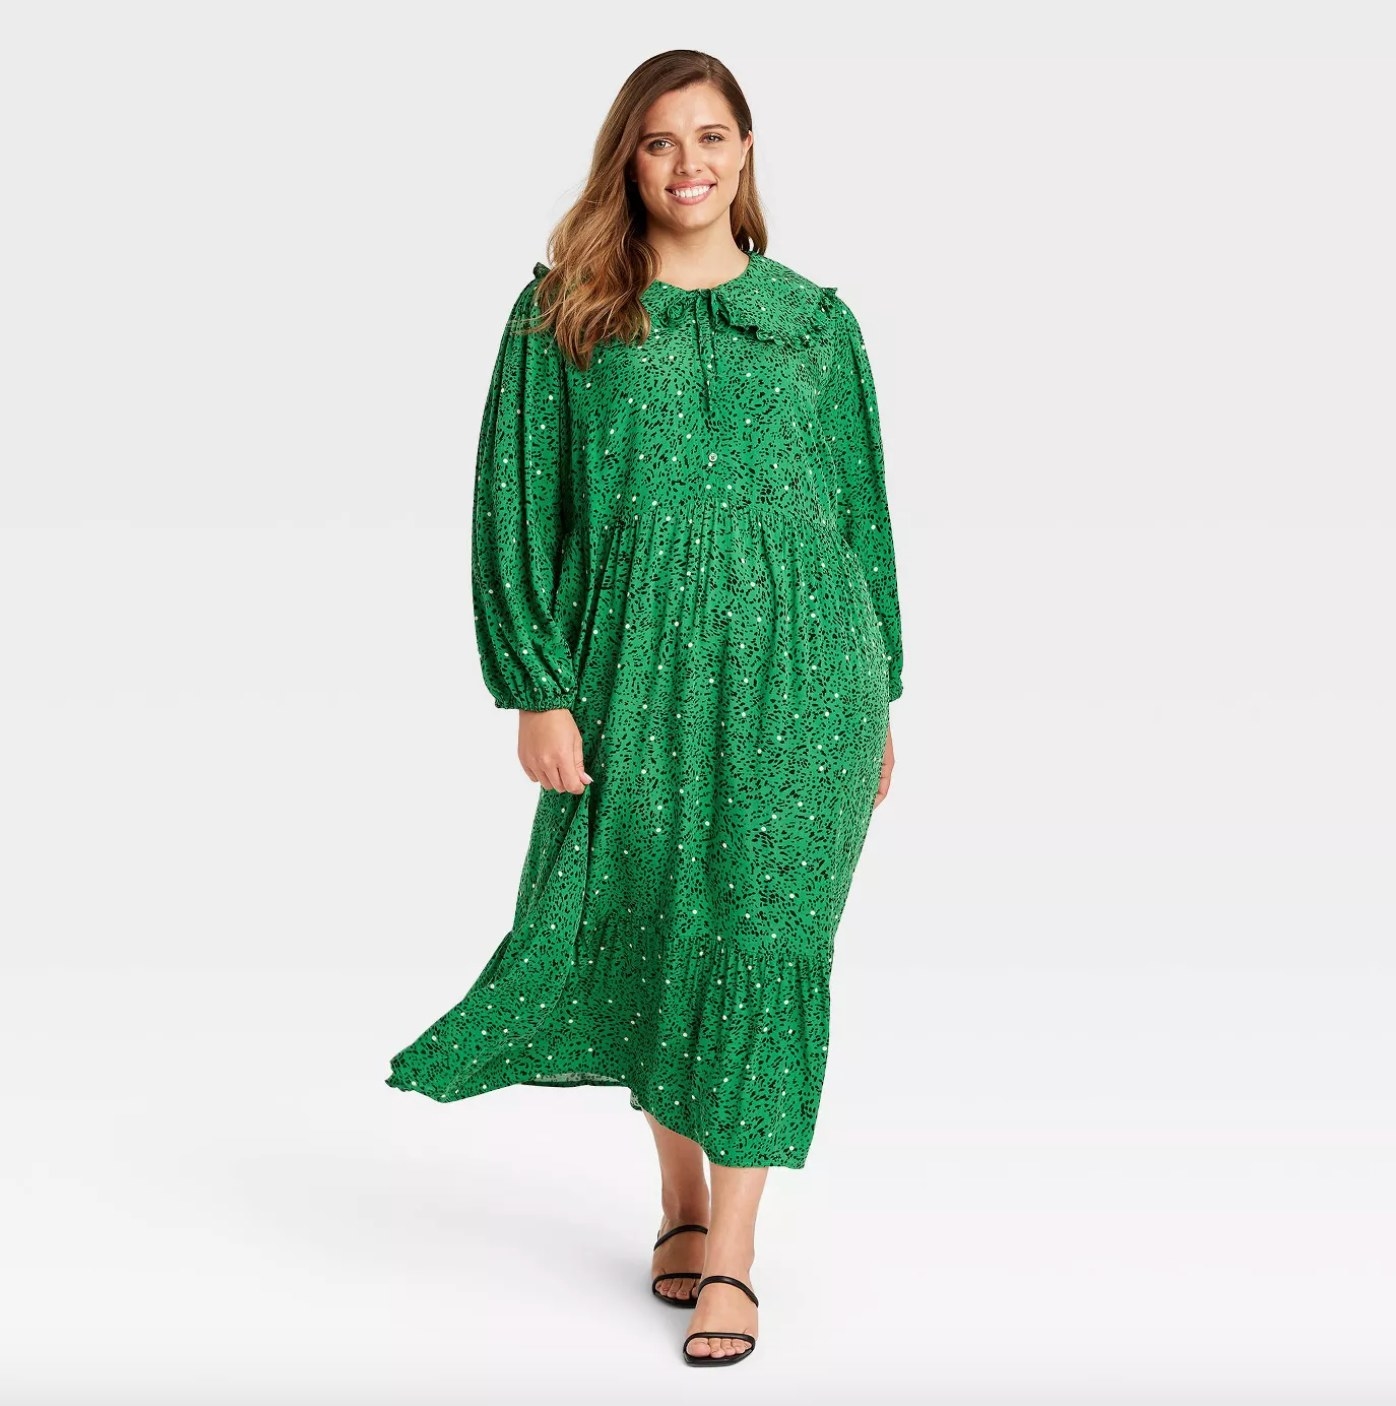 The kelly green long-sleeve midi dress